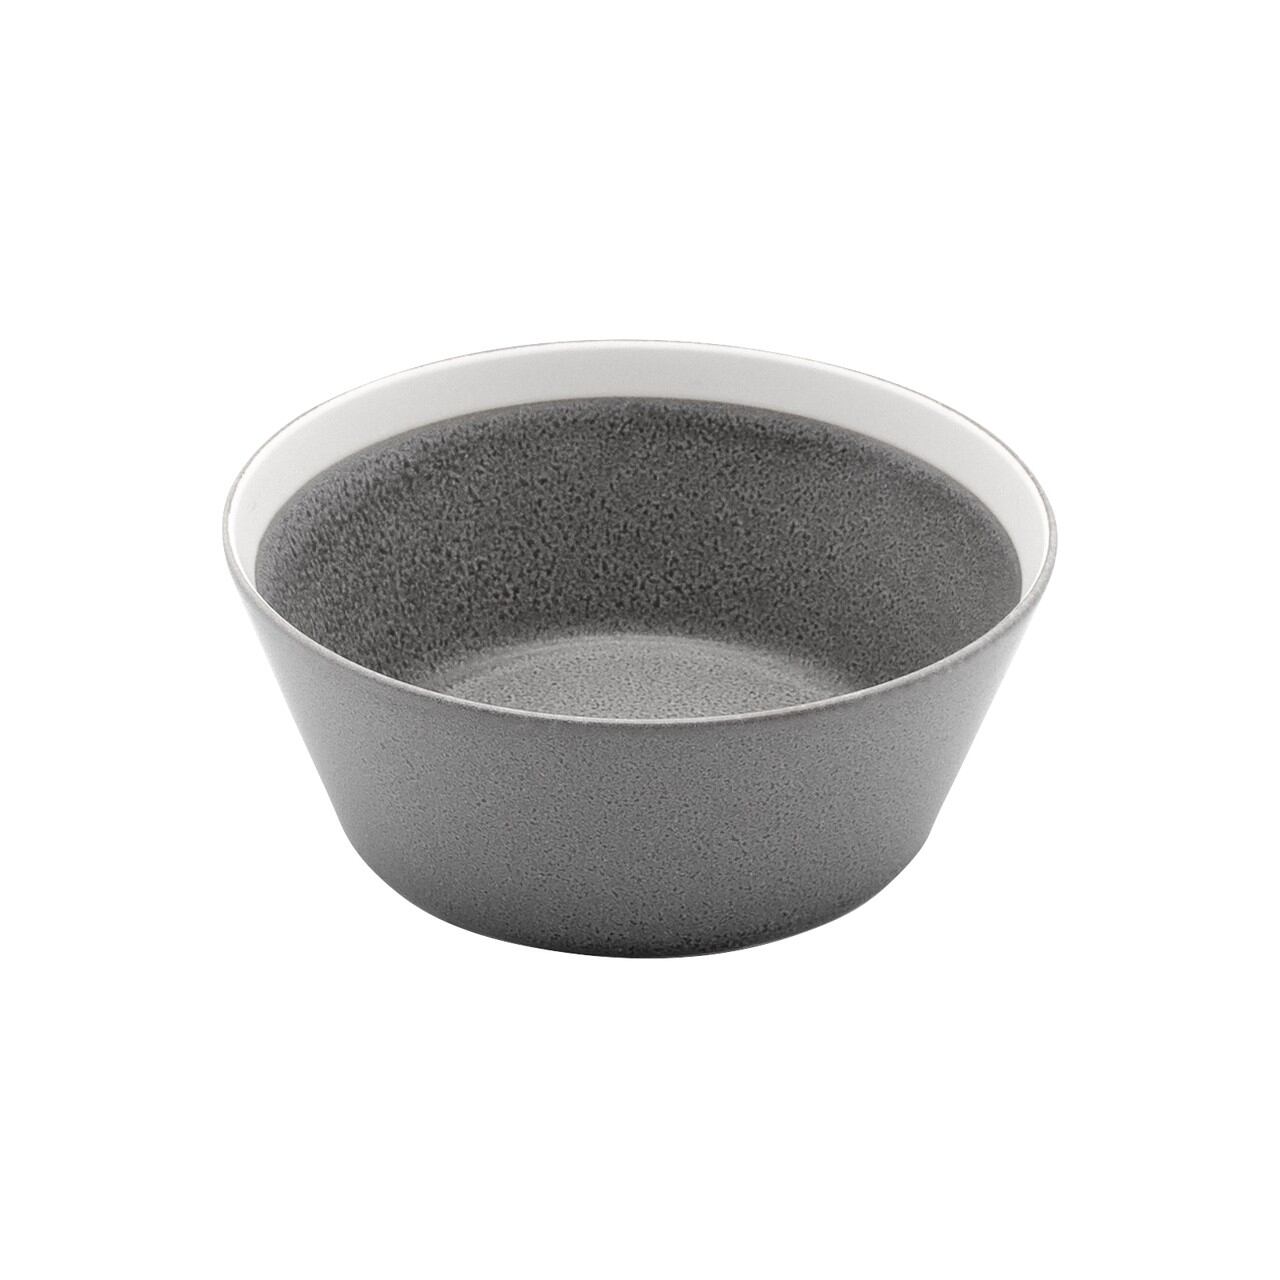 yumiko iihoshi porcelain（ユミコイイホシポーセリン）×木村硝子店 dishes bowl S (moss gray) /matte  ボウル 鉢 約高さ5×口径12.5cm 日本製 255299